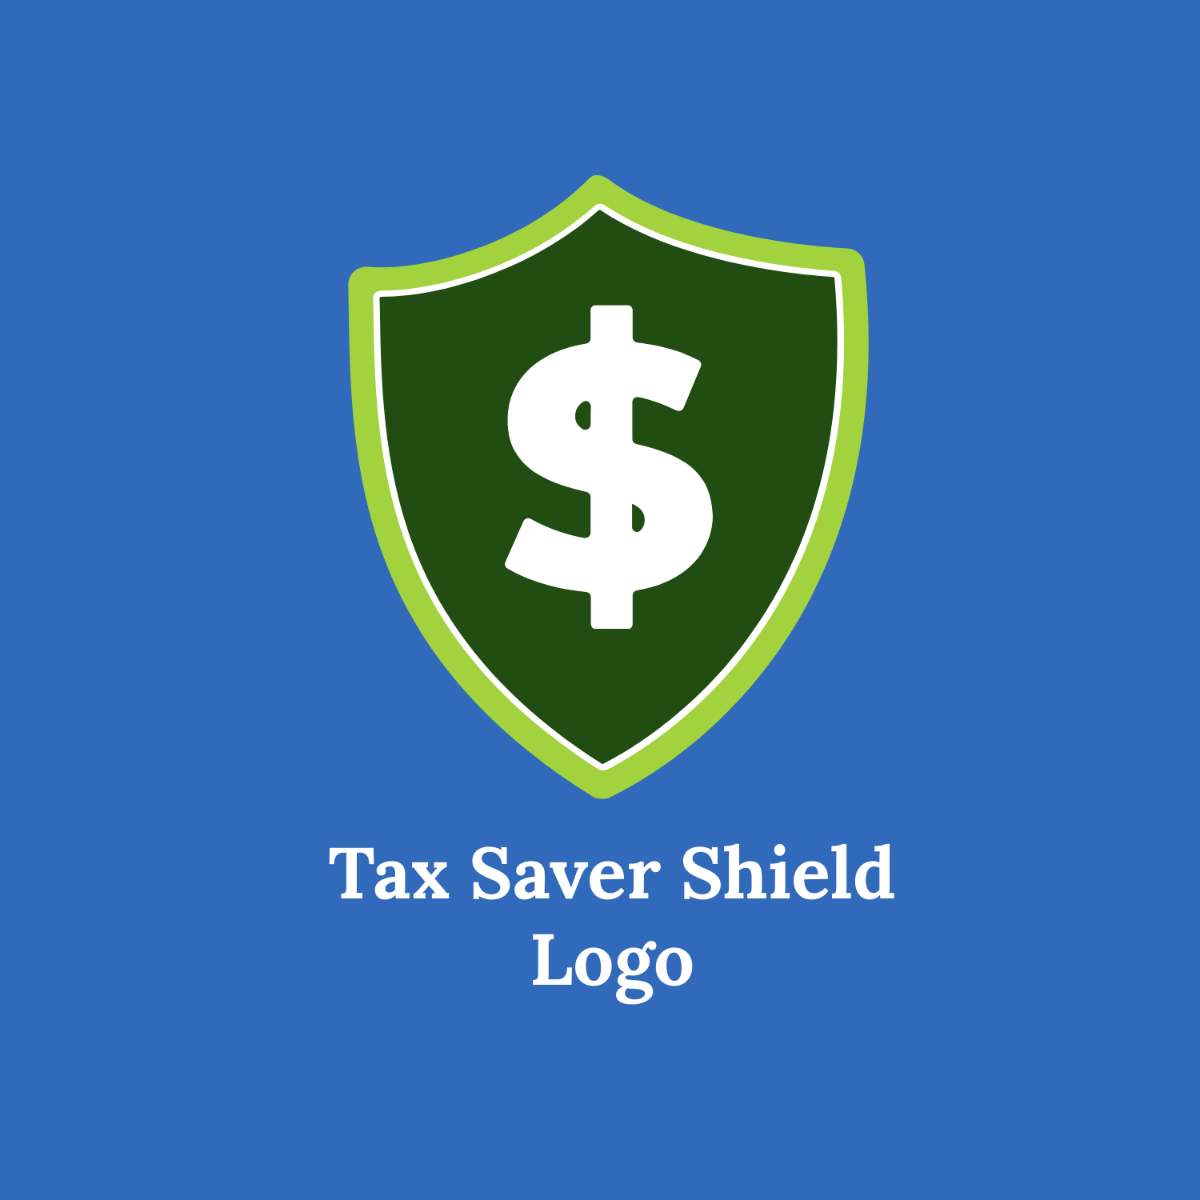 Tax Saver Shield Logo